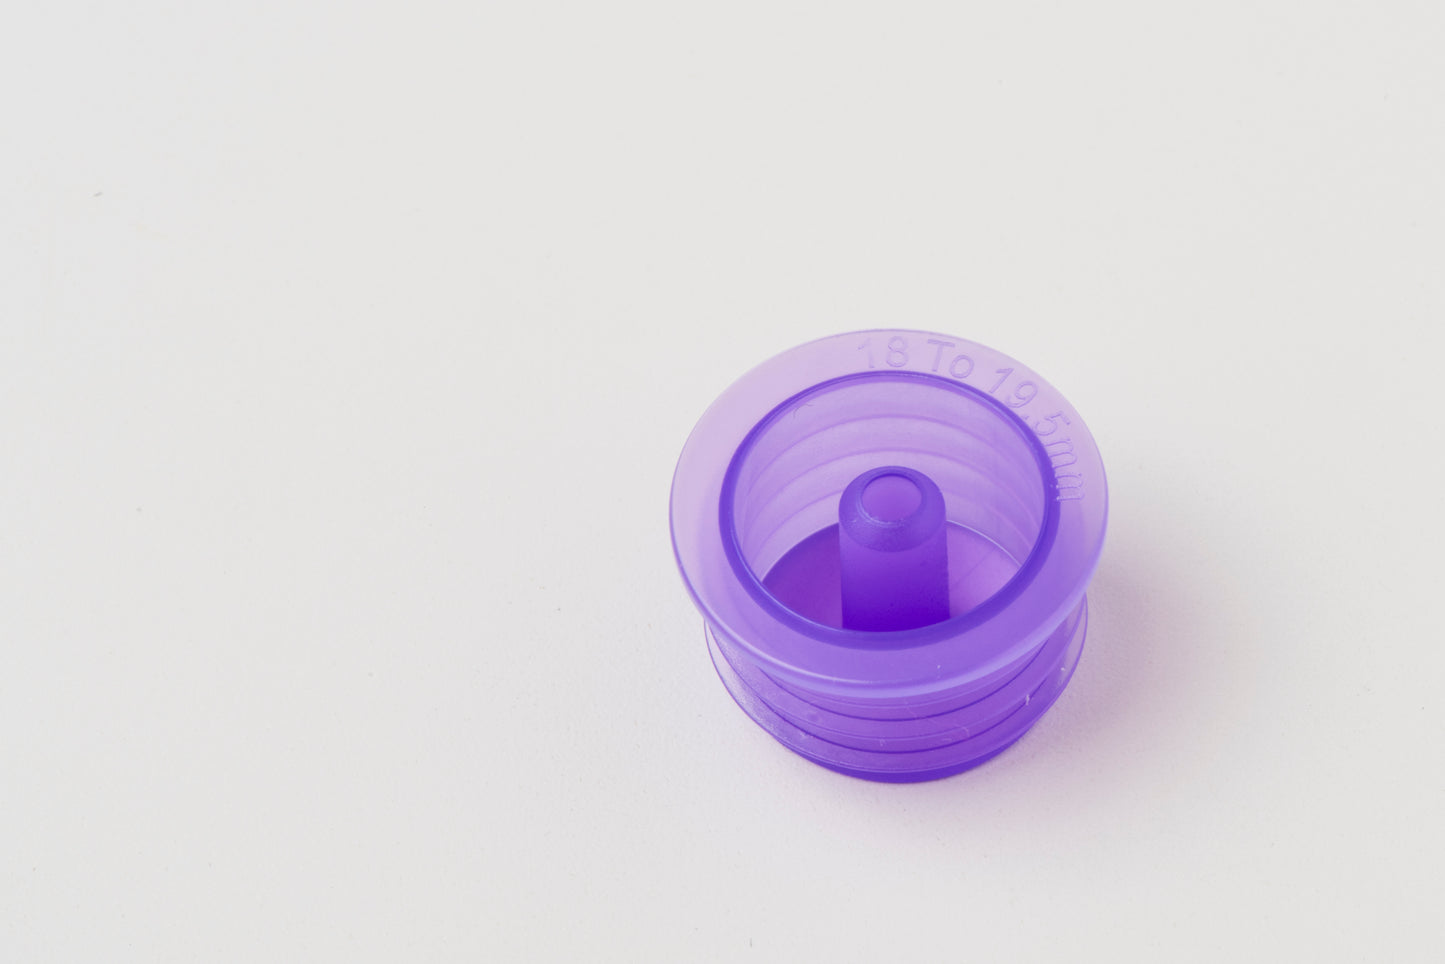 Purple ENFit Medicine Bottle Adapters